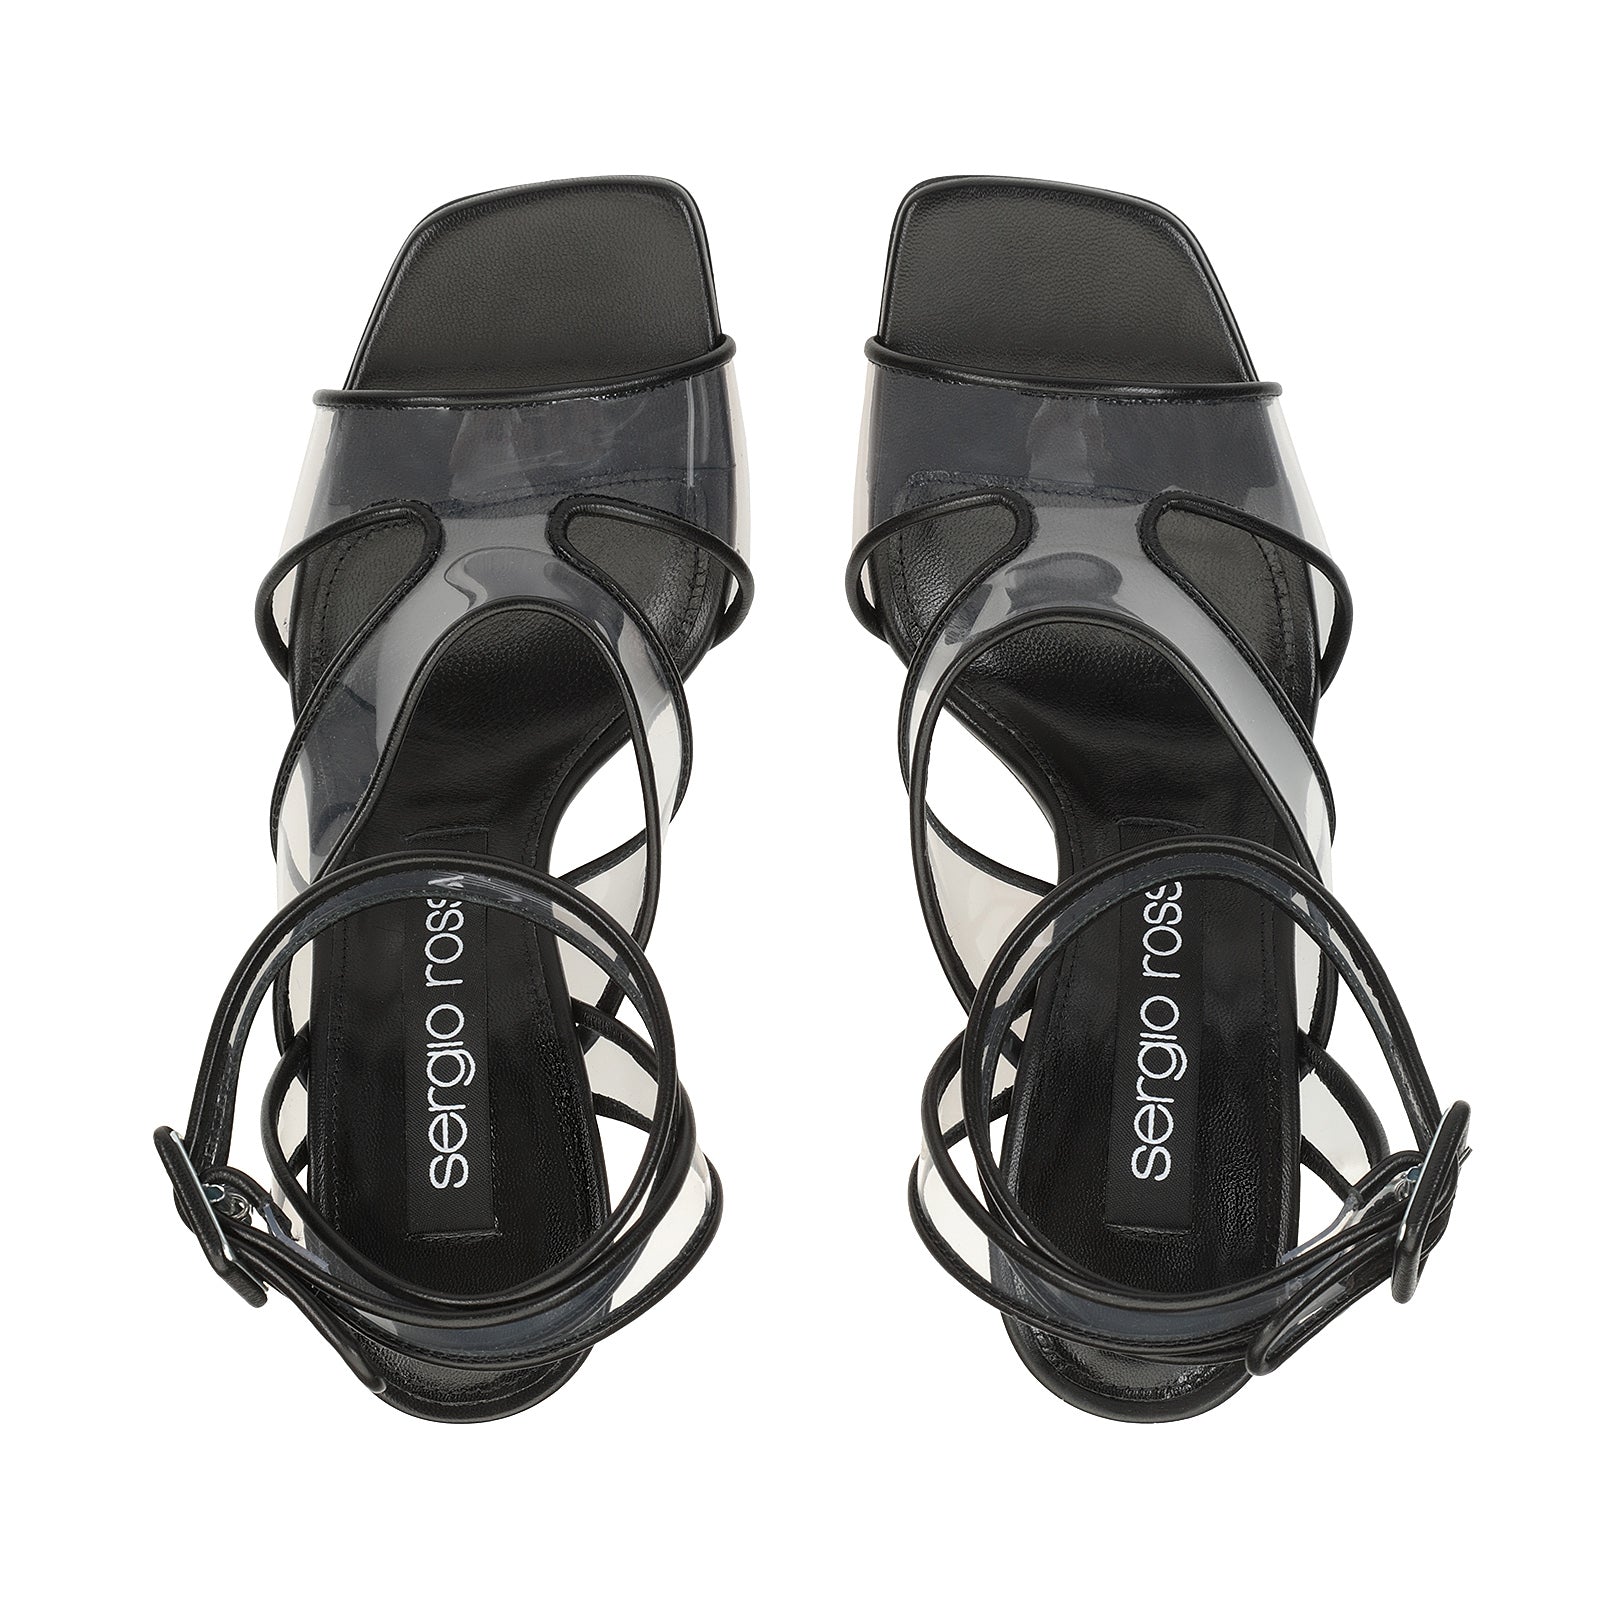 Sr 100 heeled sandals - Nero & Trasparente